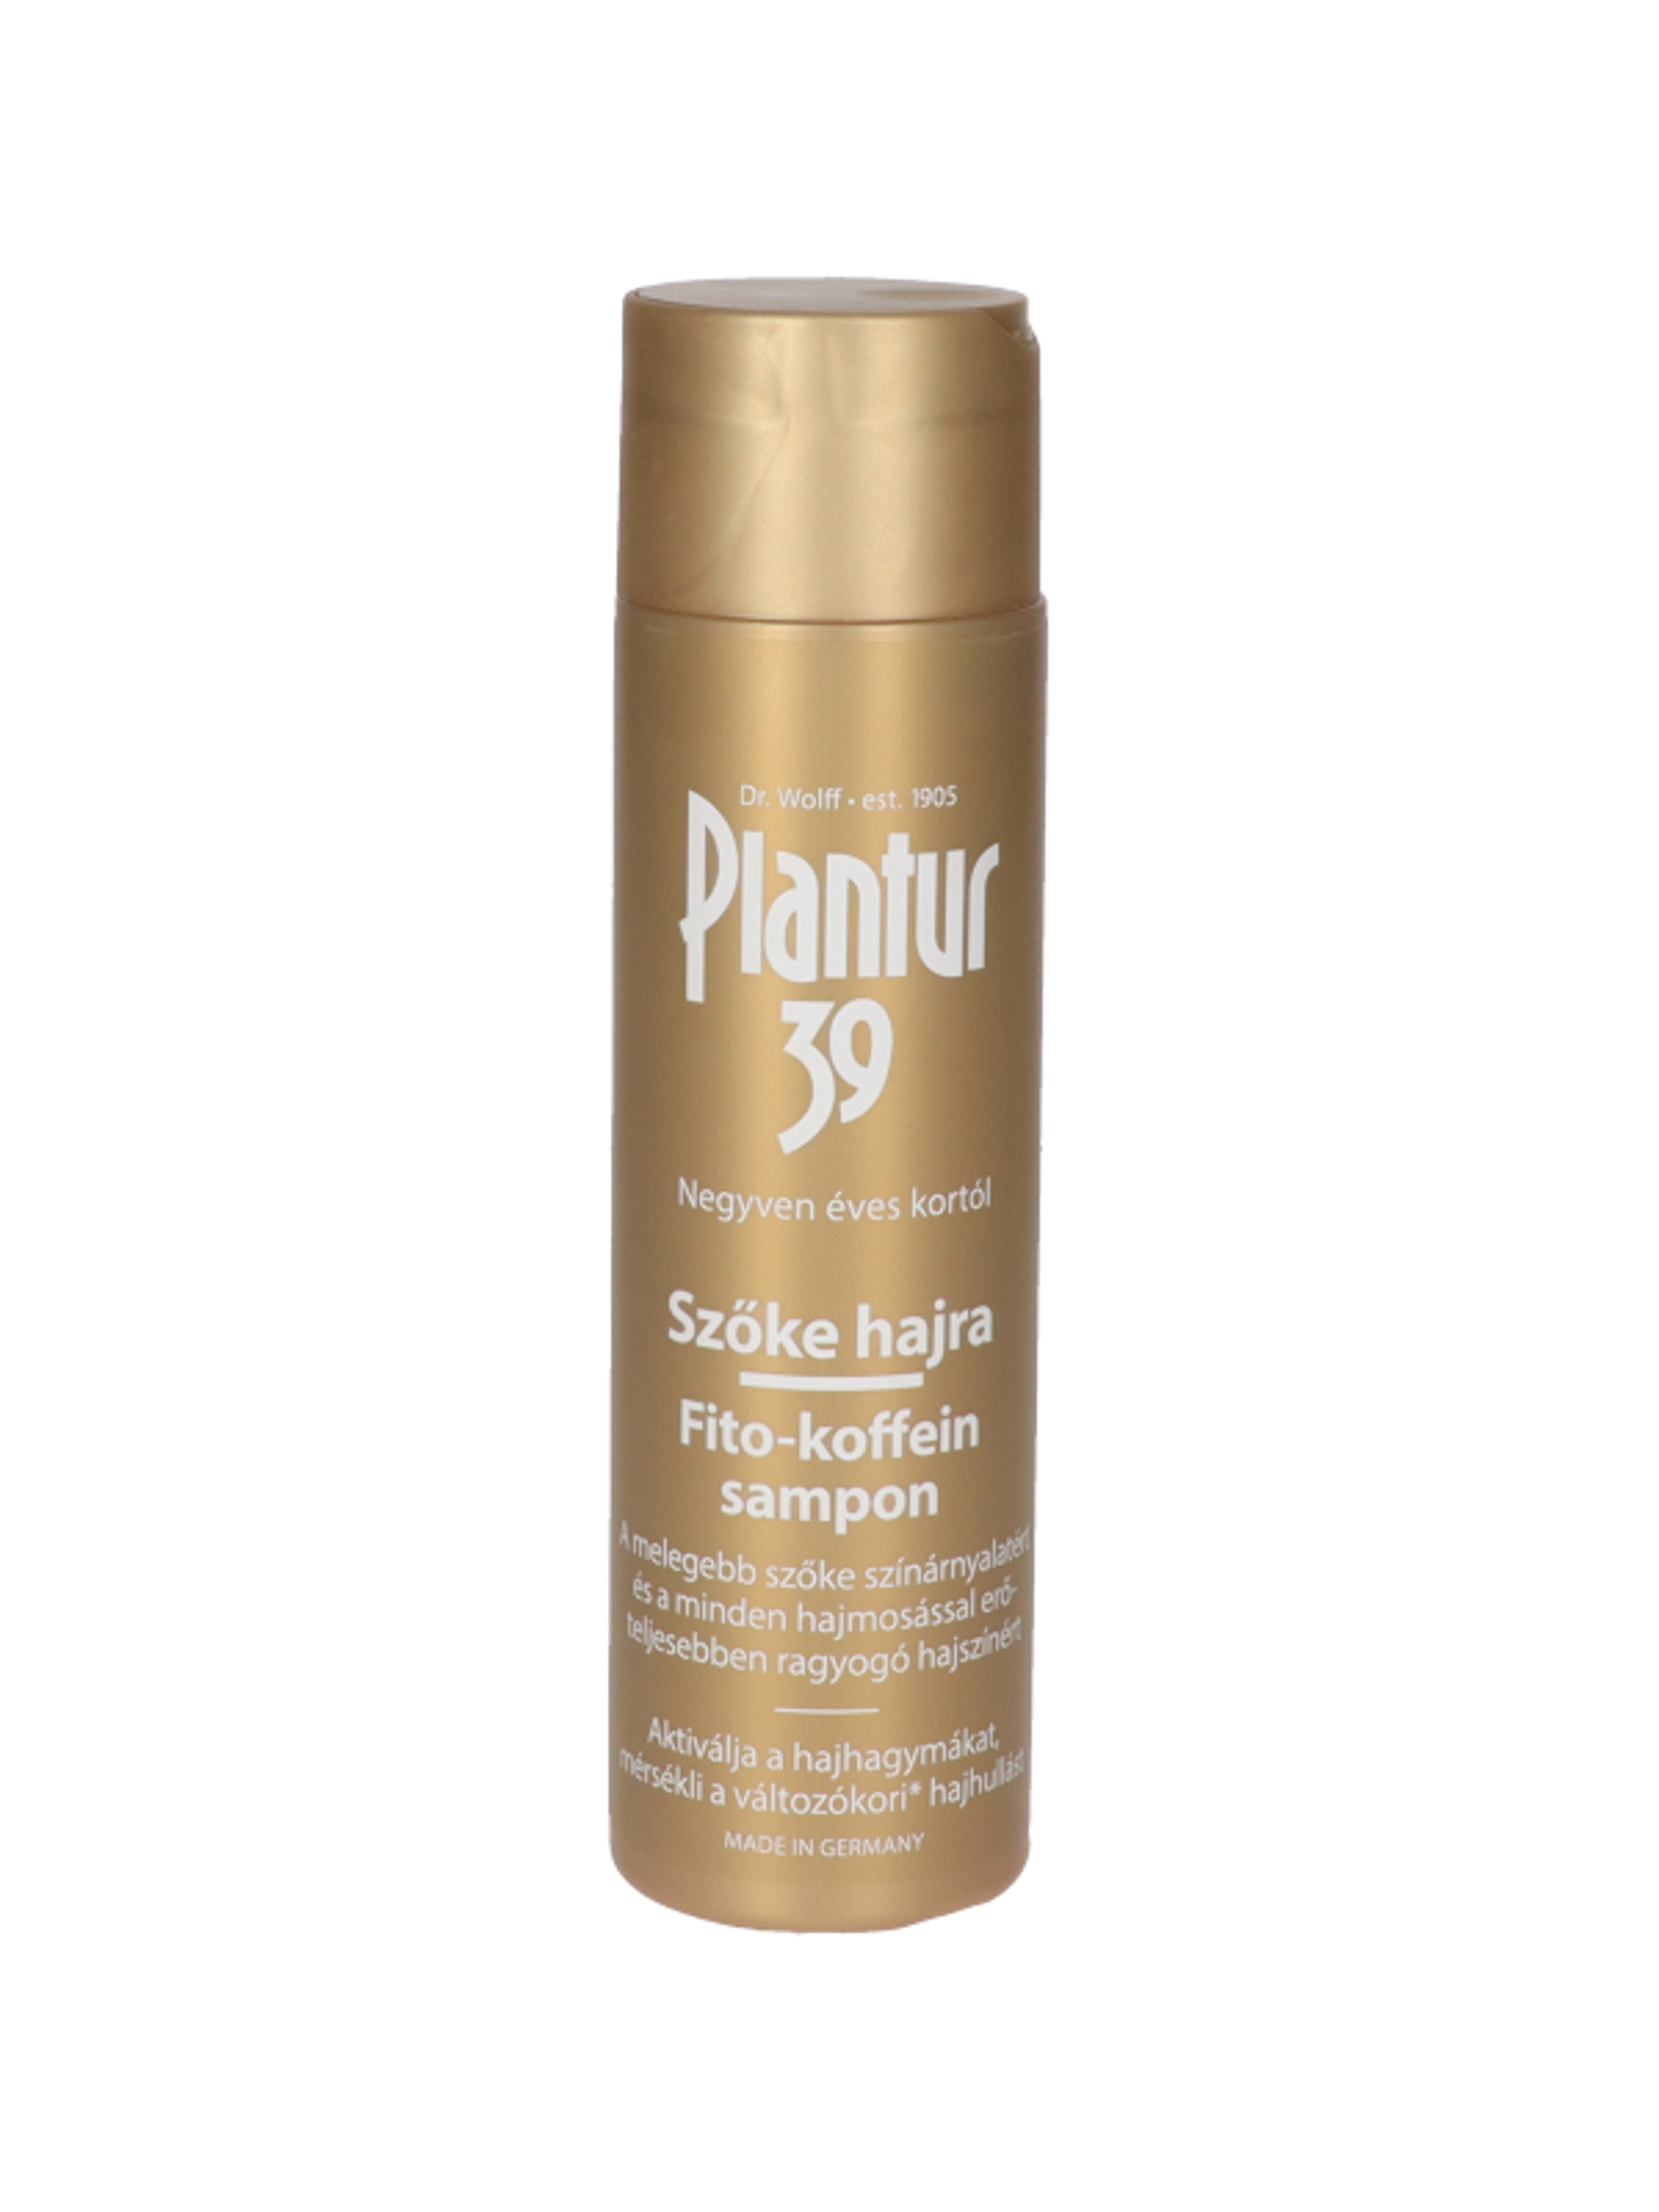 Plantur 39 fito-koffein sampon szőke hajra - 250 ml-1